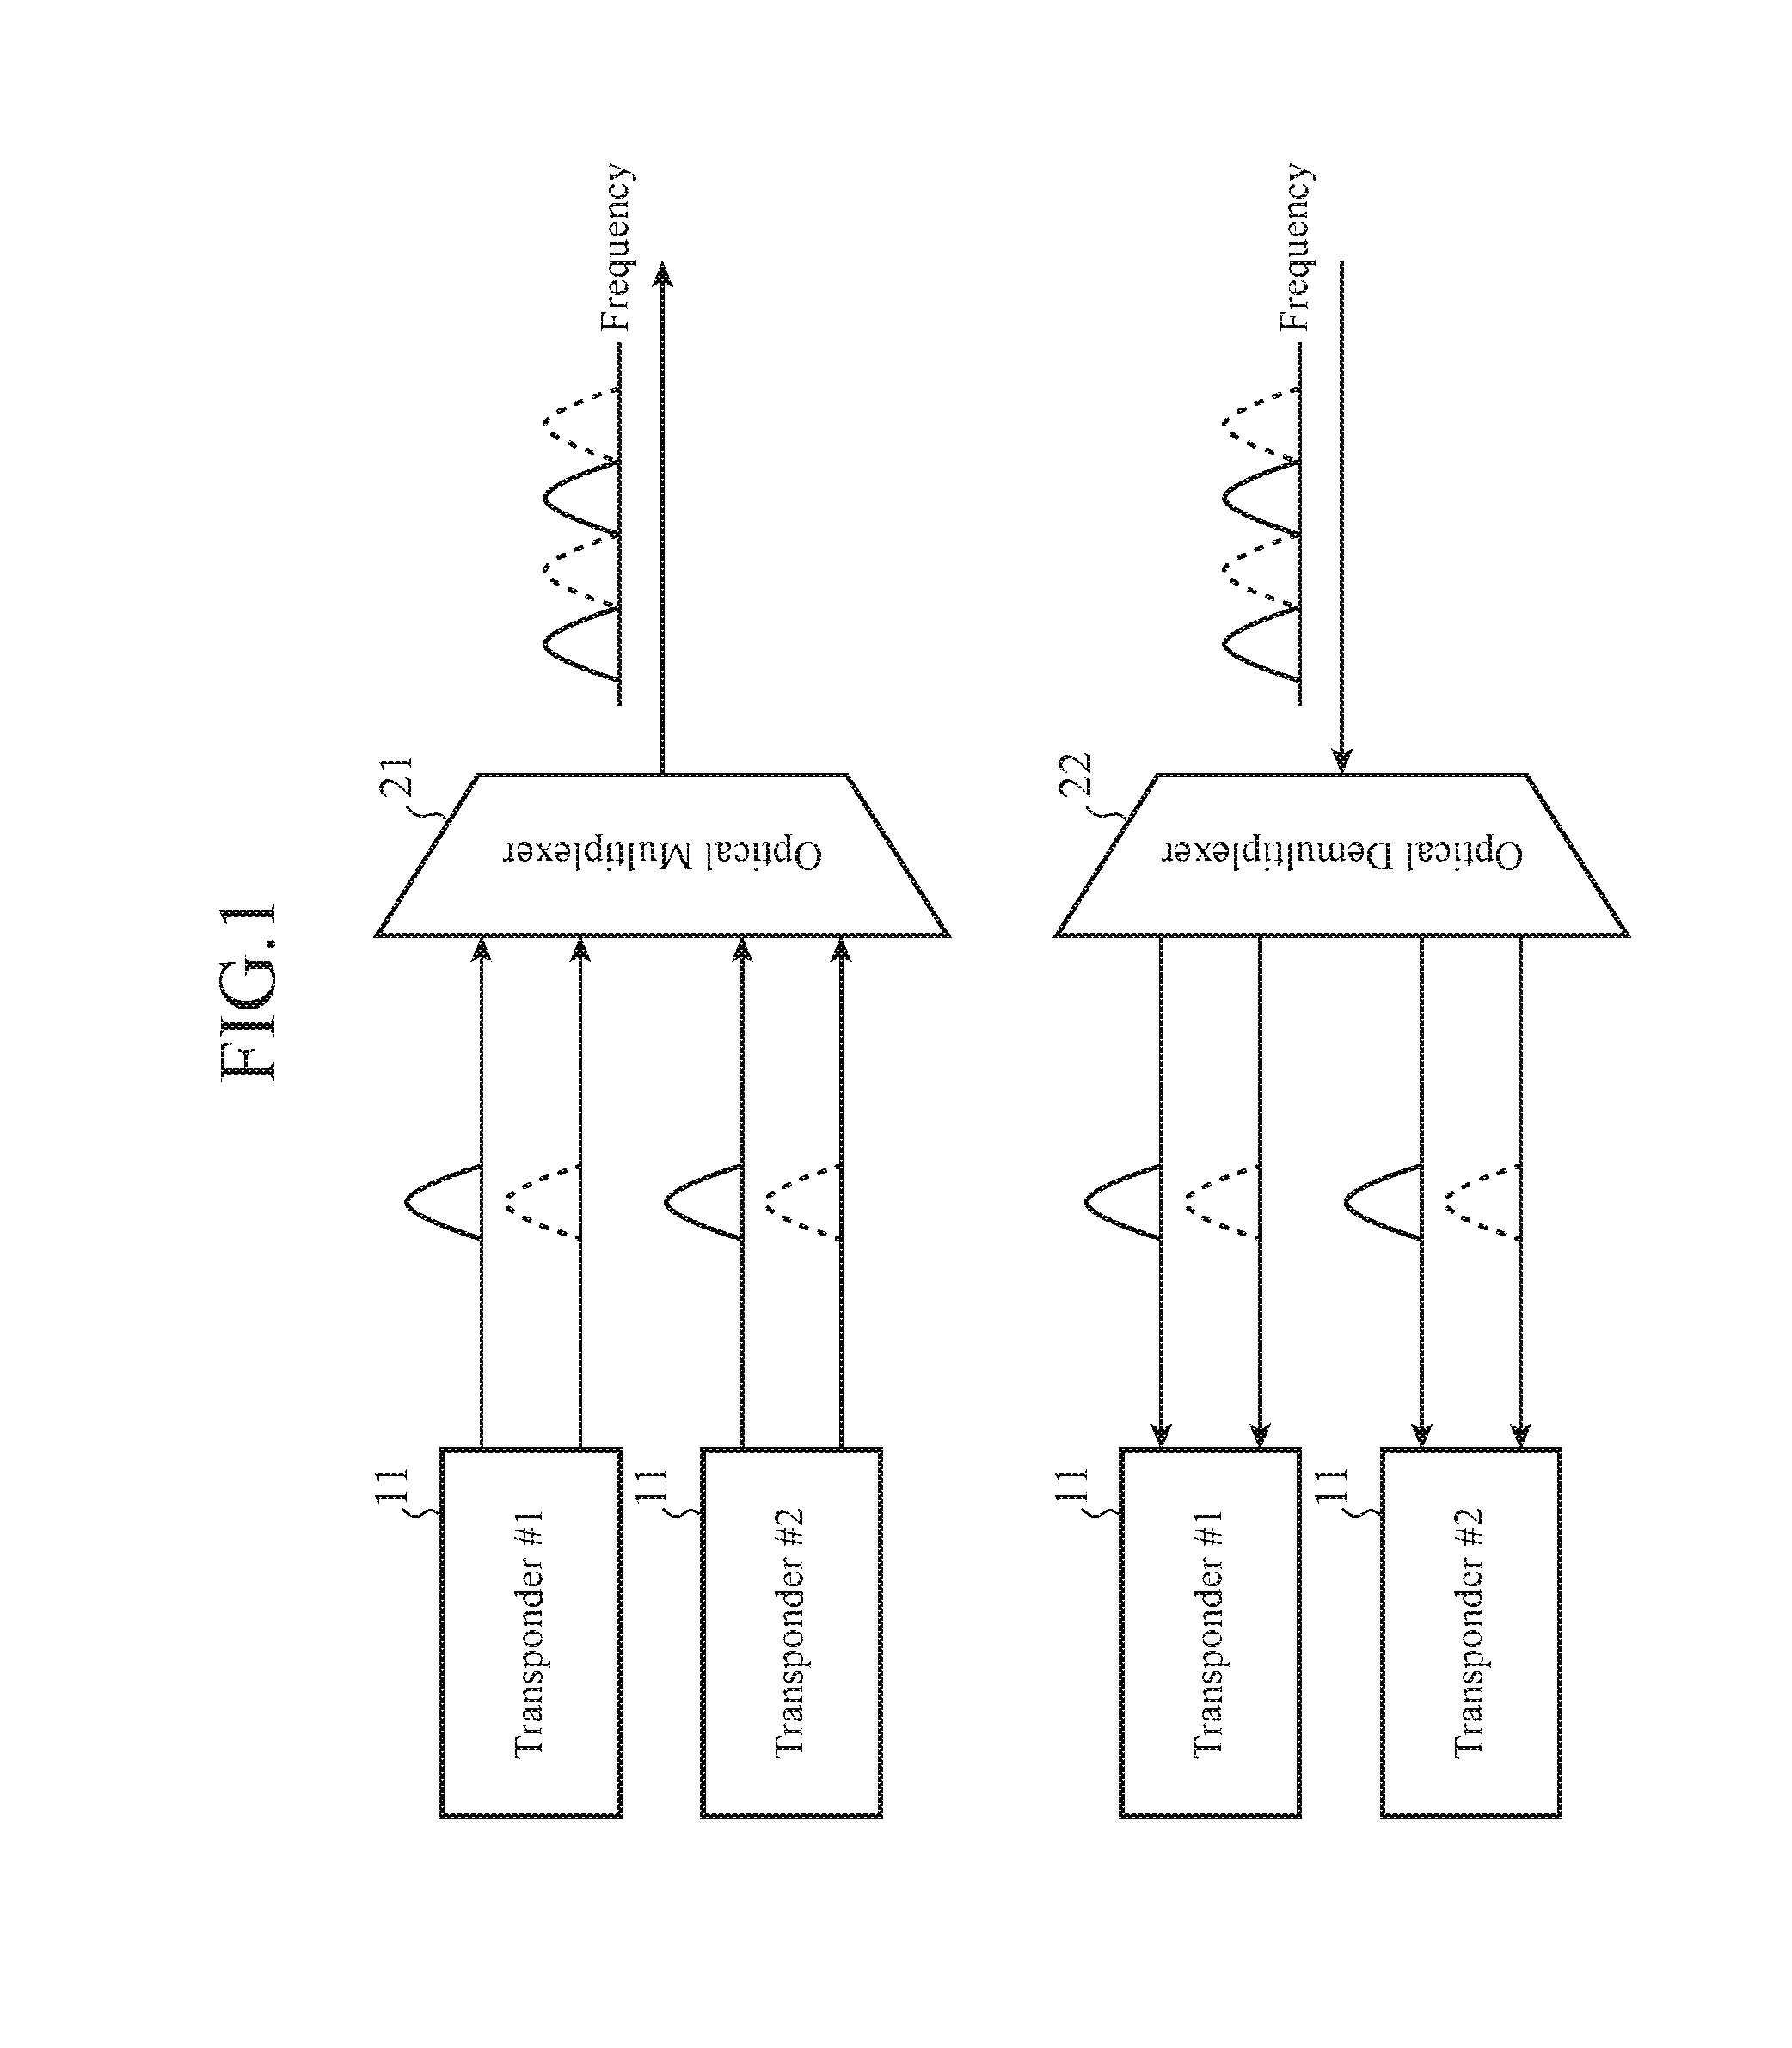 Wavelength multiplexing transmission system